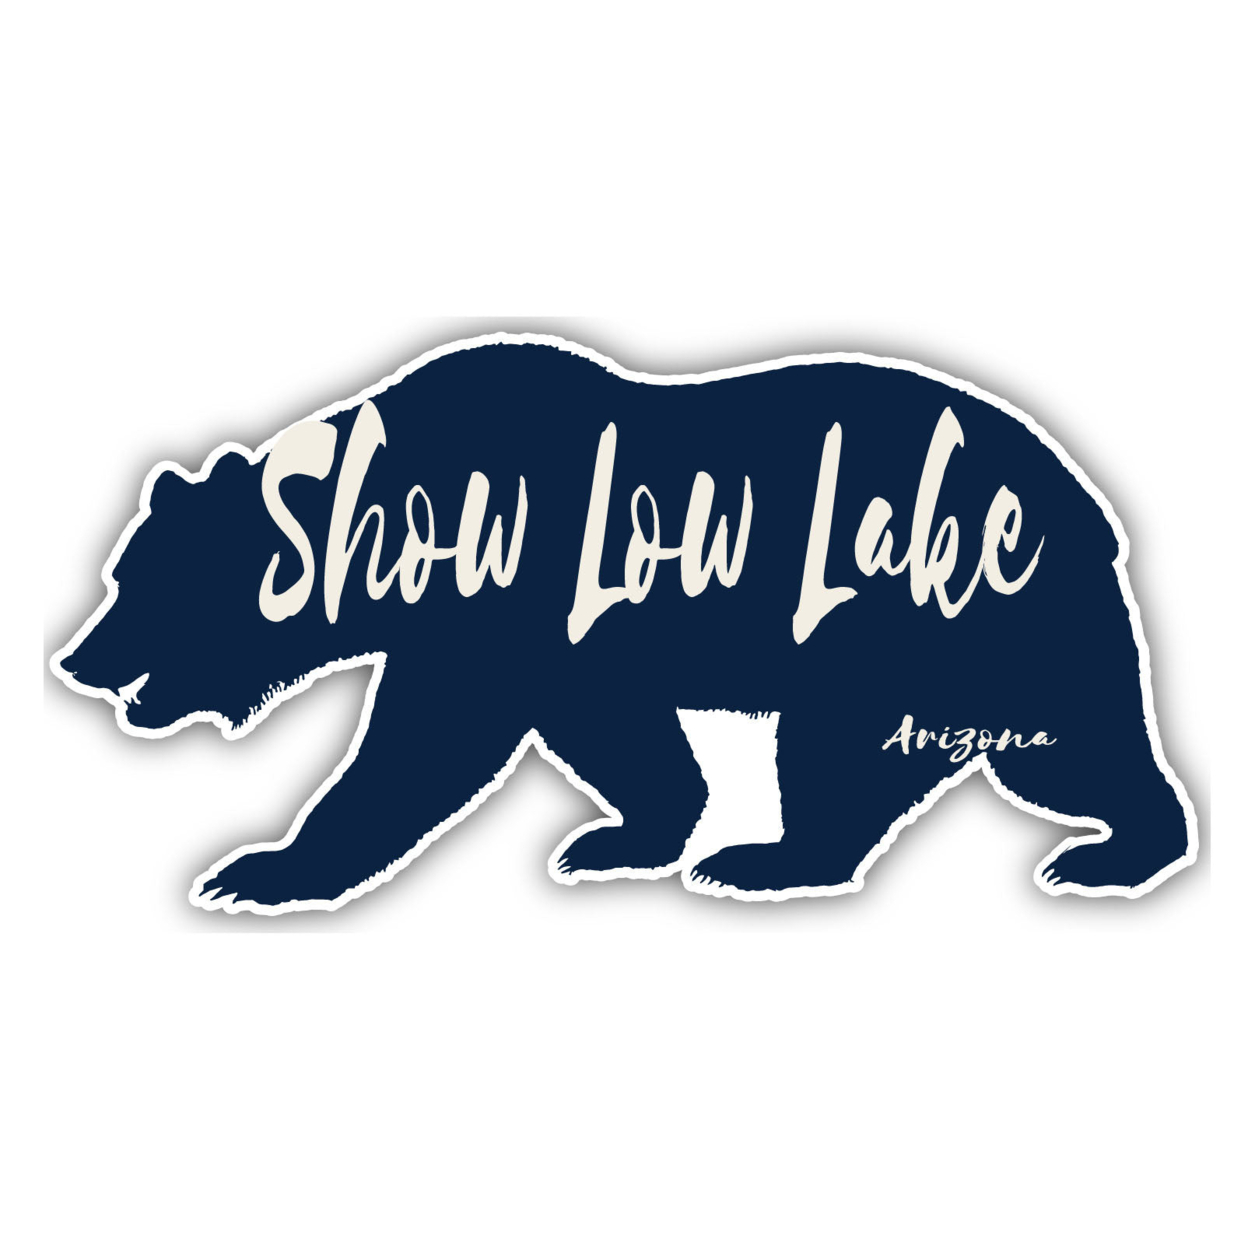 Show Low Lake Arizona Souvenir Decorative Stickers (Choose Theme And Size) - Single Unit, 4-Inch, Bear